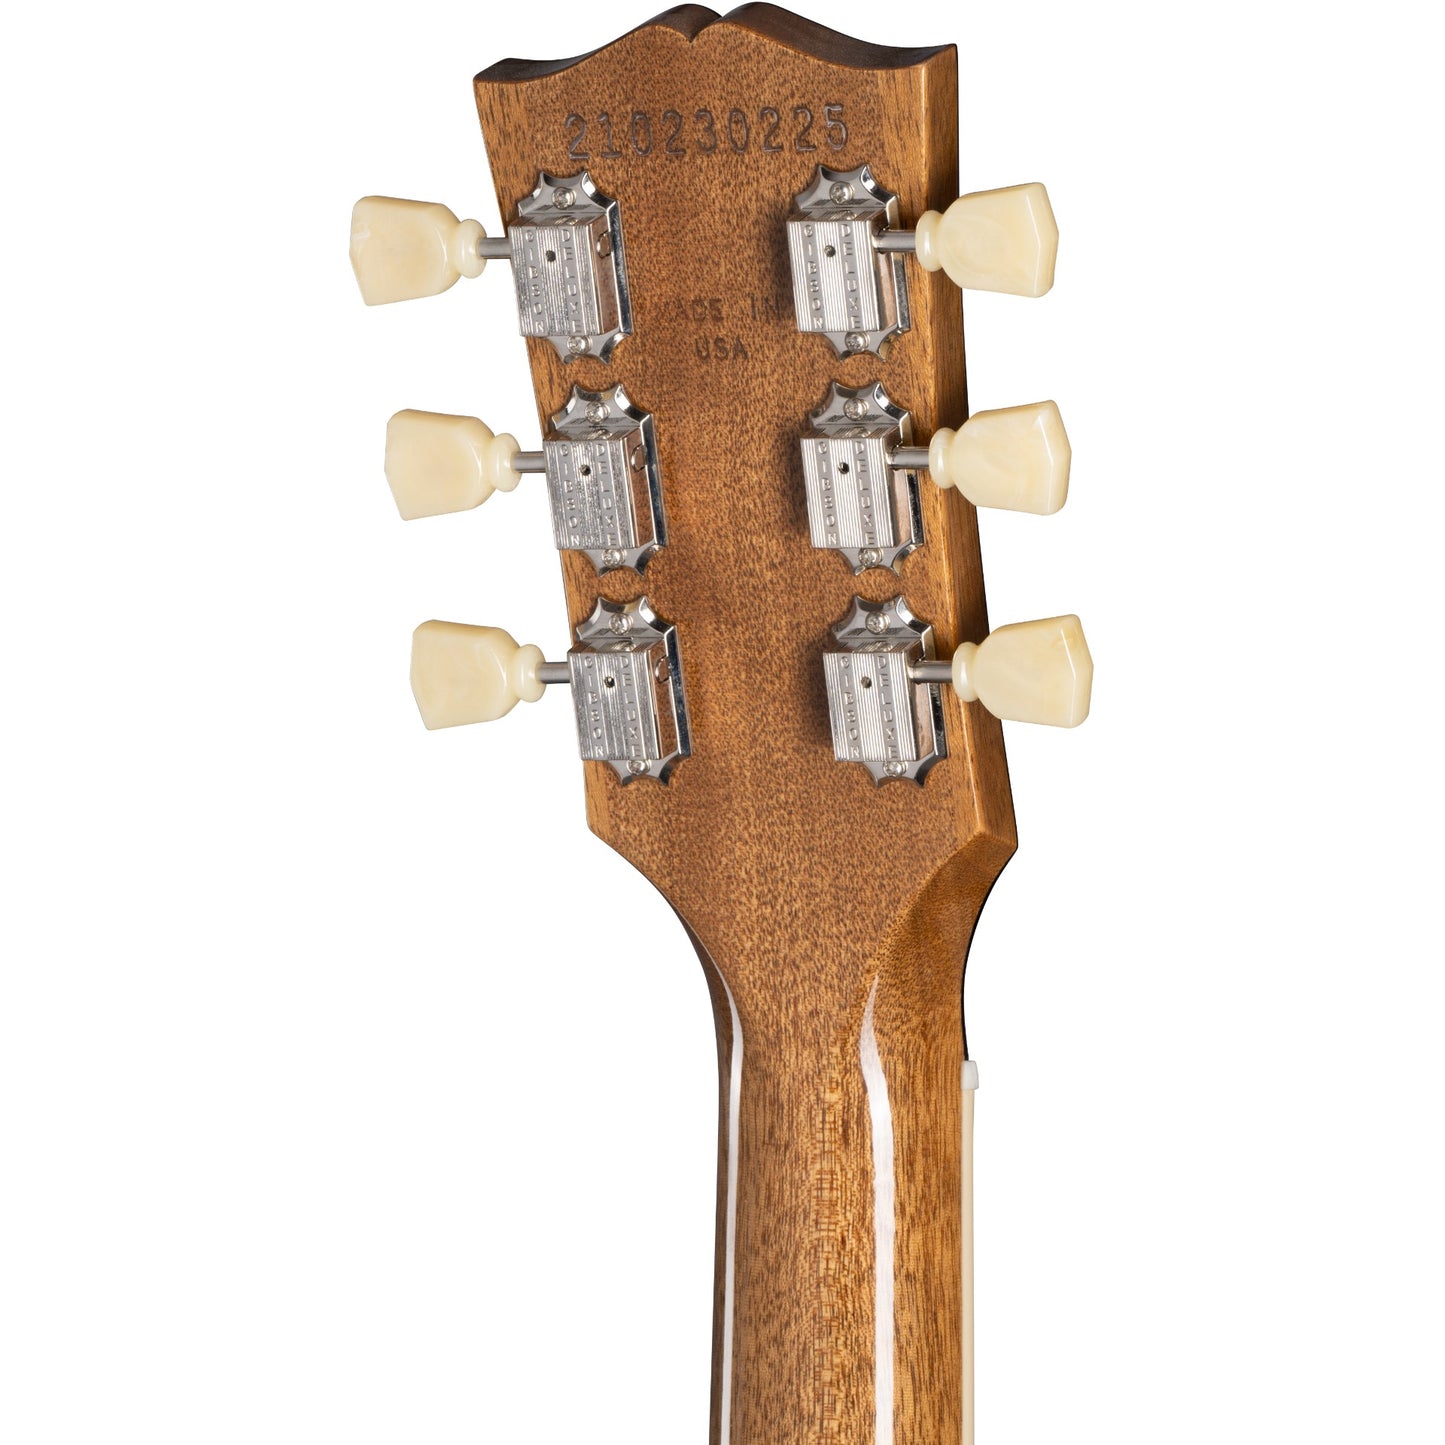 Gibson Les Paul Standard 50s Plain Top Electric Guitar - Ebony Top